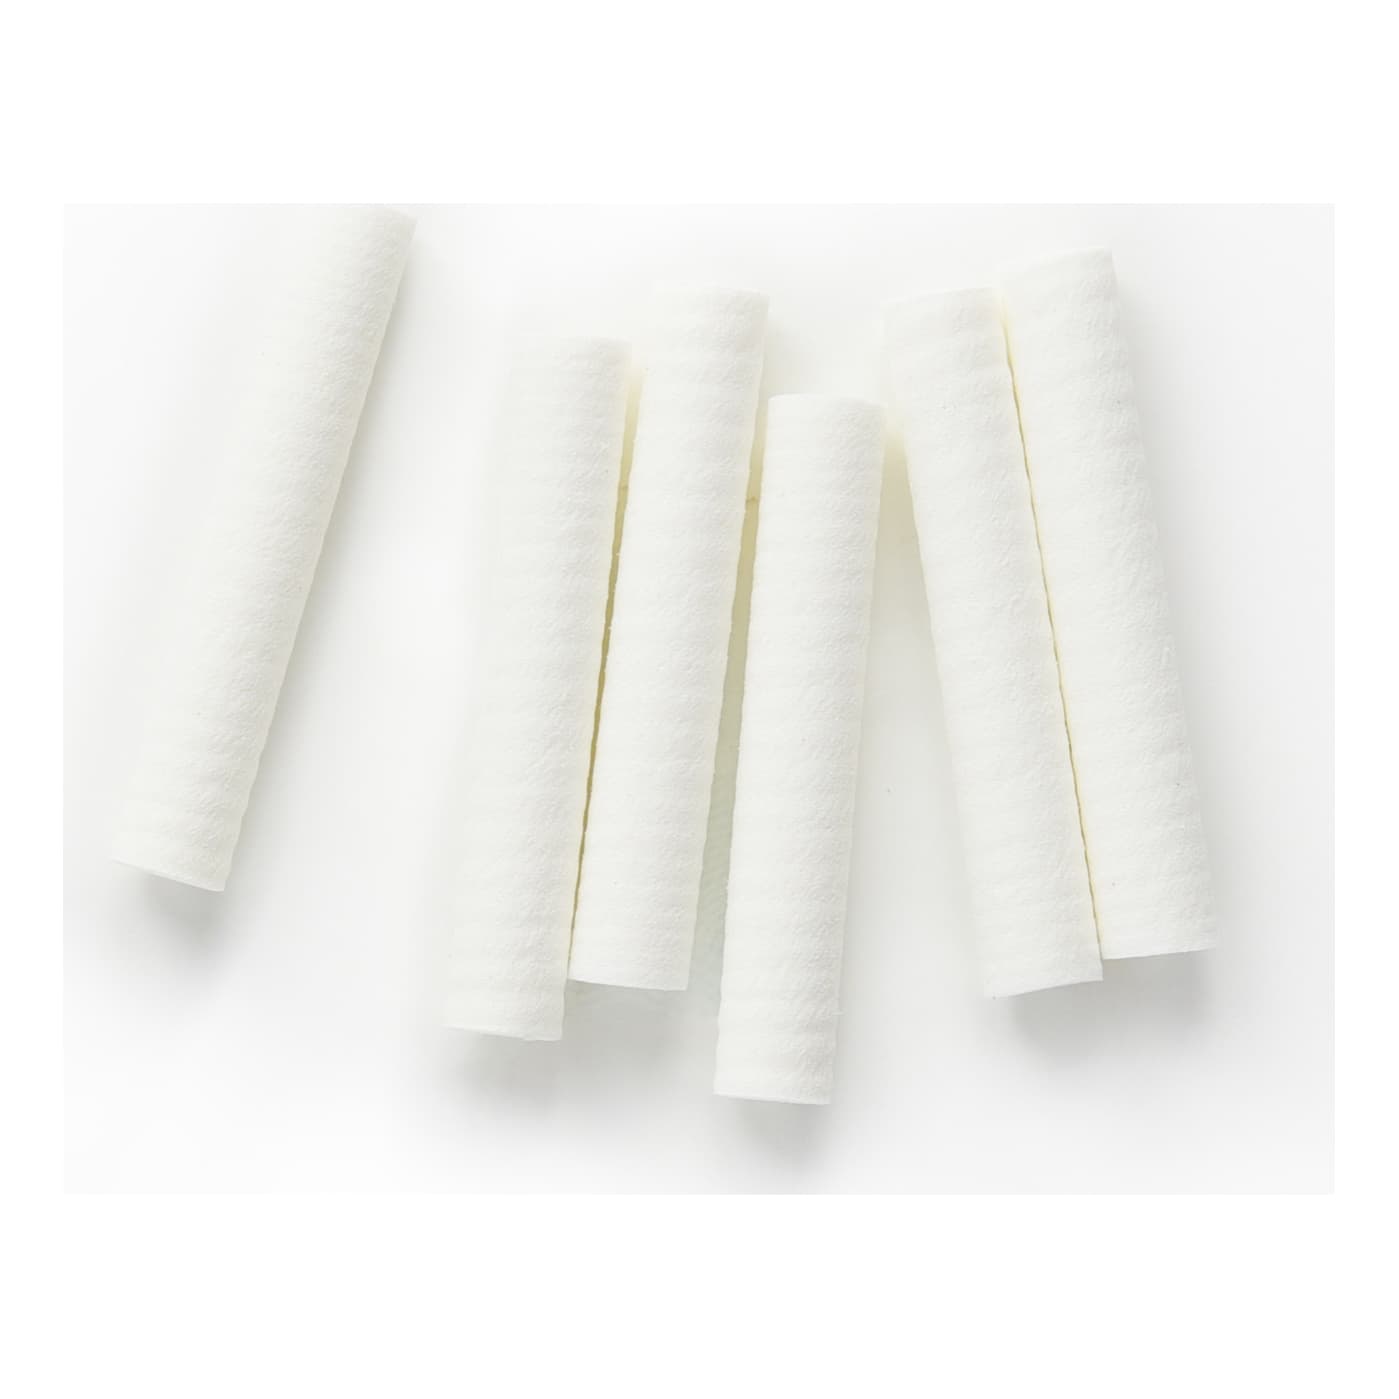 Cabela's 1/4" Foam Cylinders - White